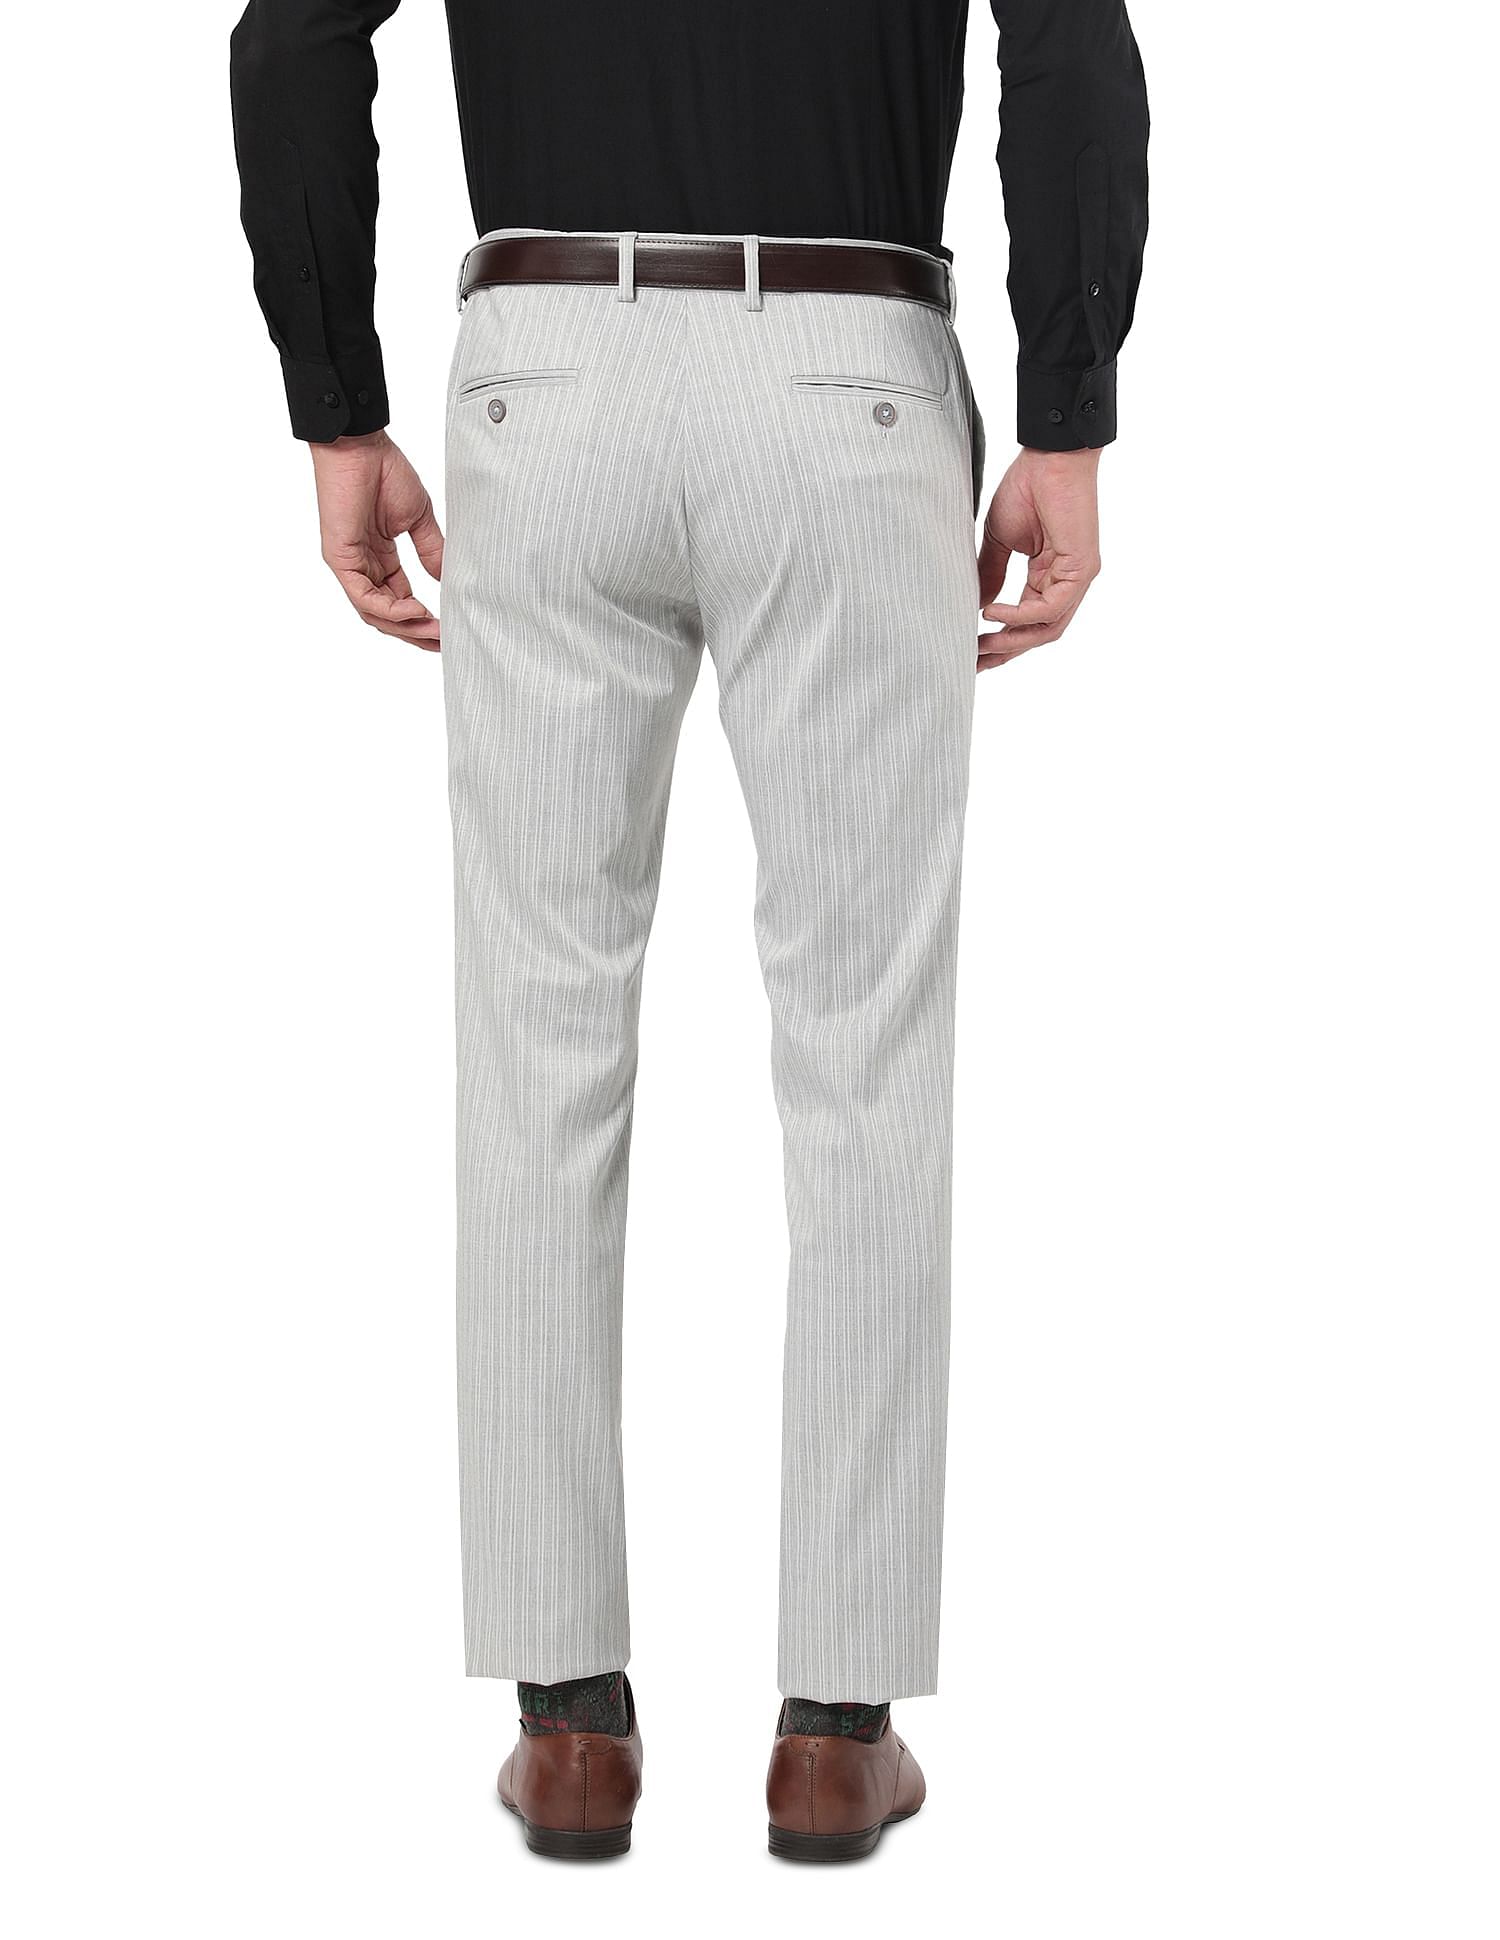 Jinxer Striped Men Grey Track Pants  Buy Jinxer Striped Men Grey Track  Pants Online at Best Prices in India  Flipkartcom